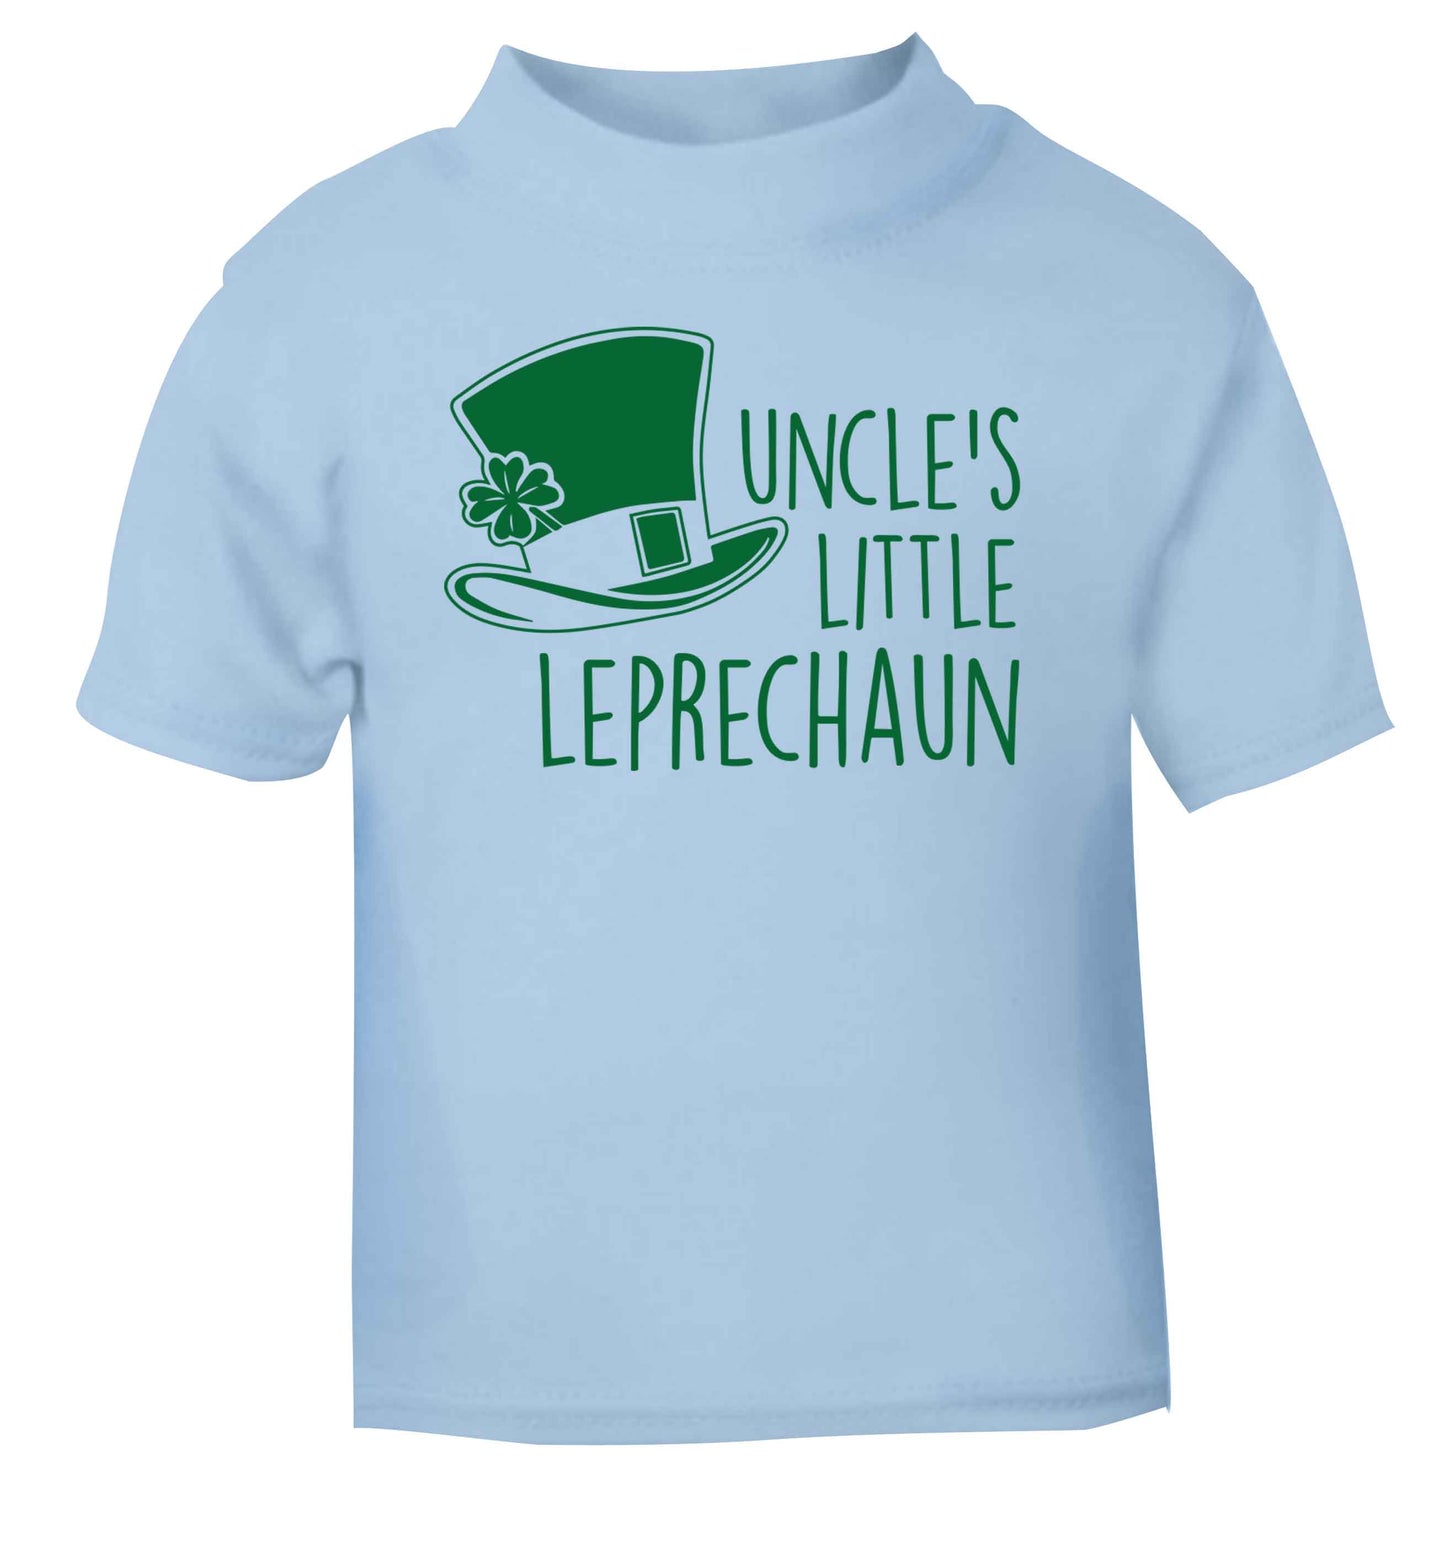 Uncles little leprechaun light blue baby toddler Tshirt 2 Years